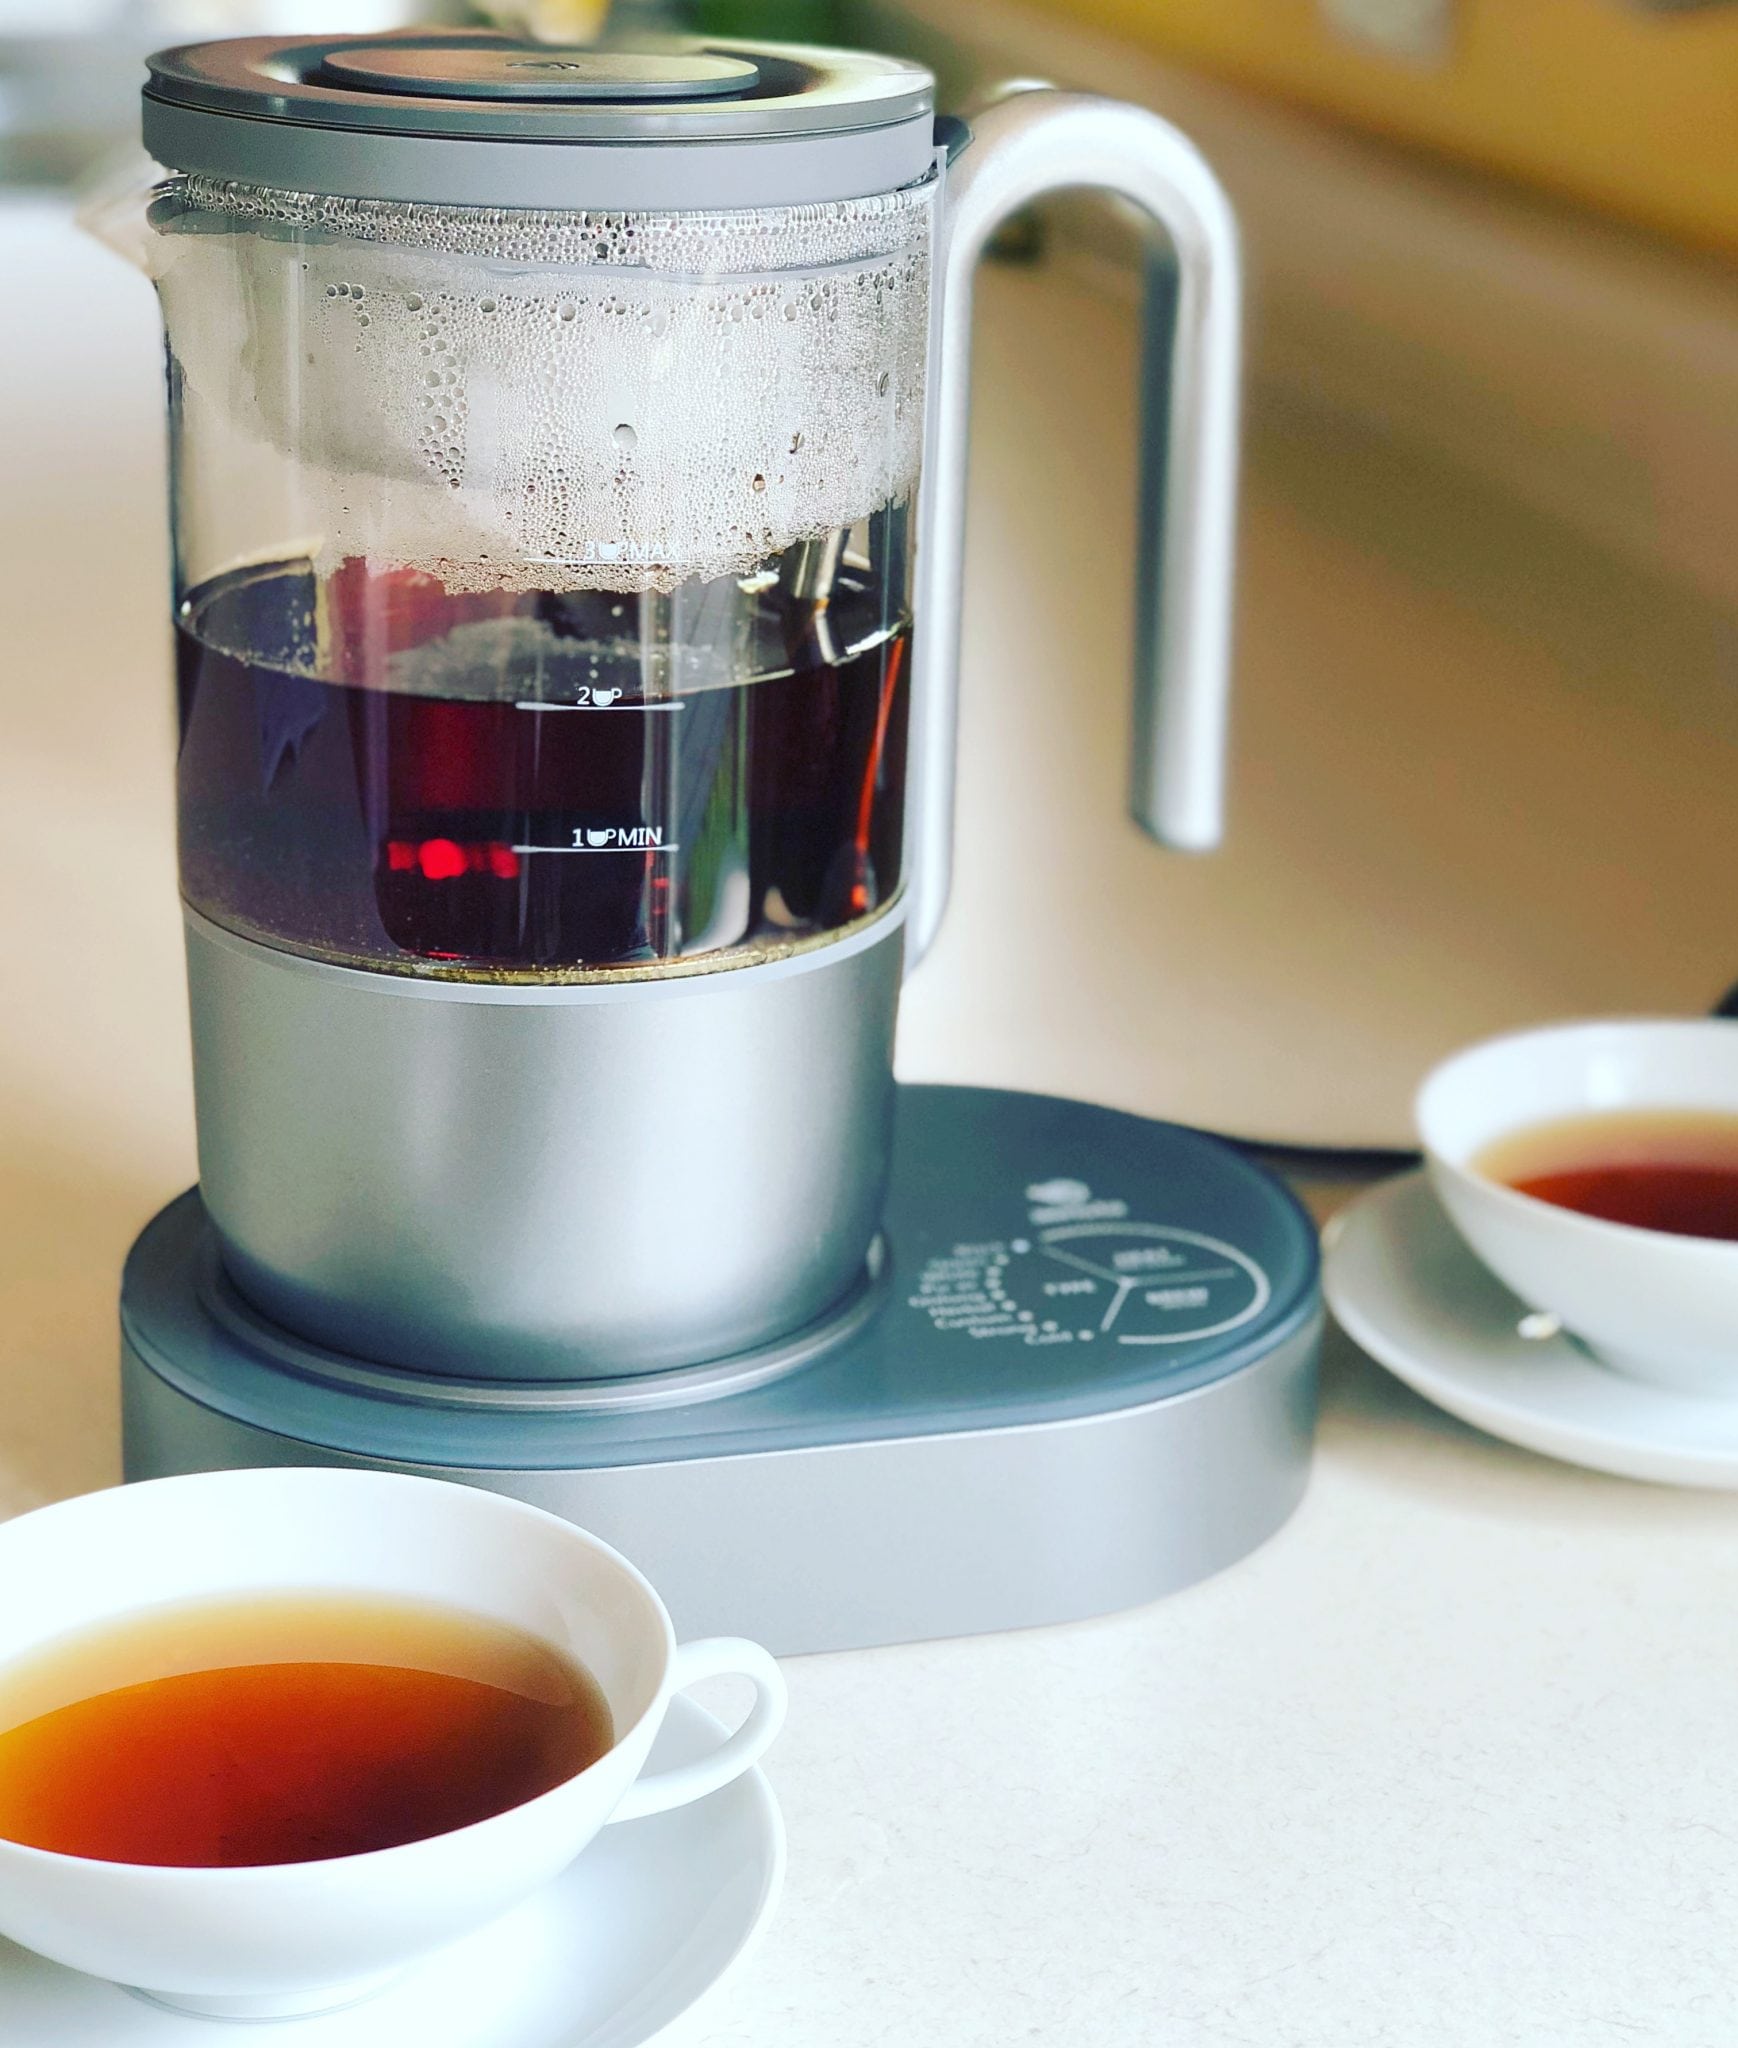 Qi Aerista Smart Tea Brewer Review – iHeartTeas